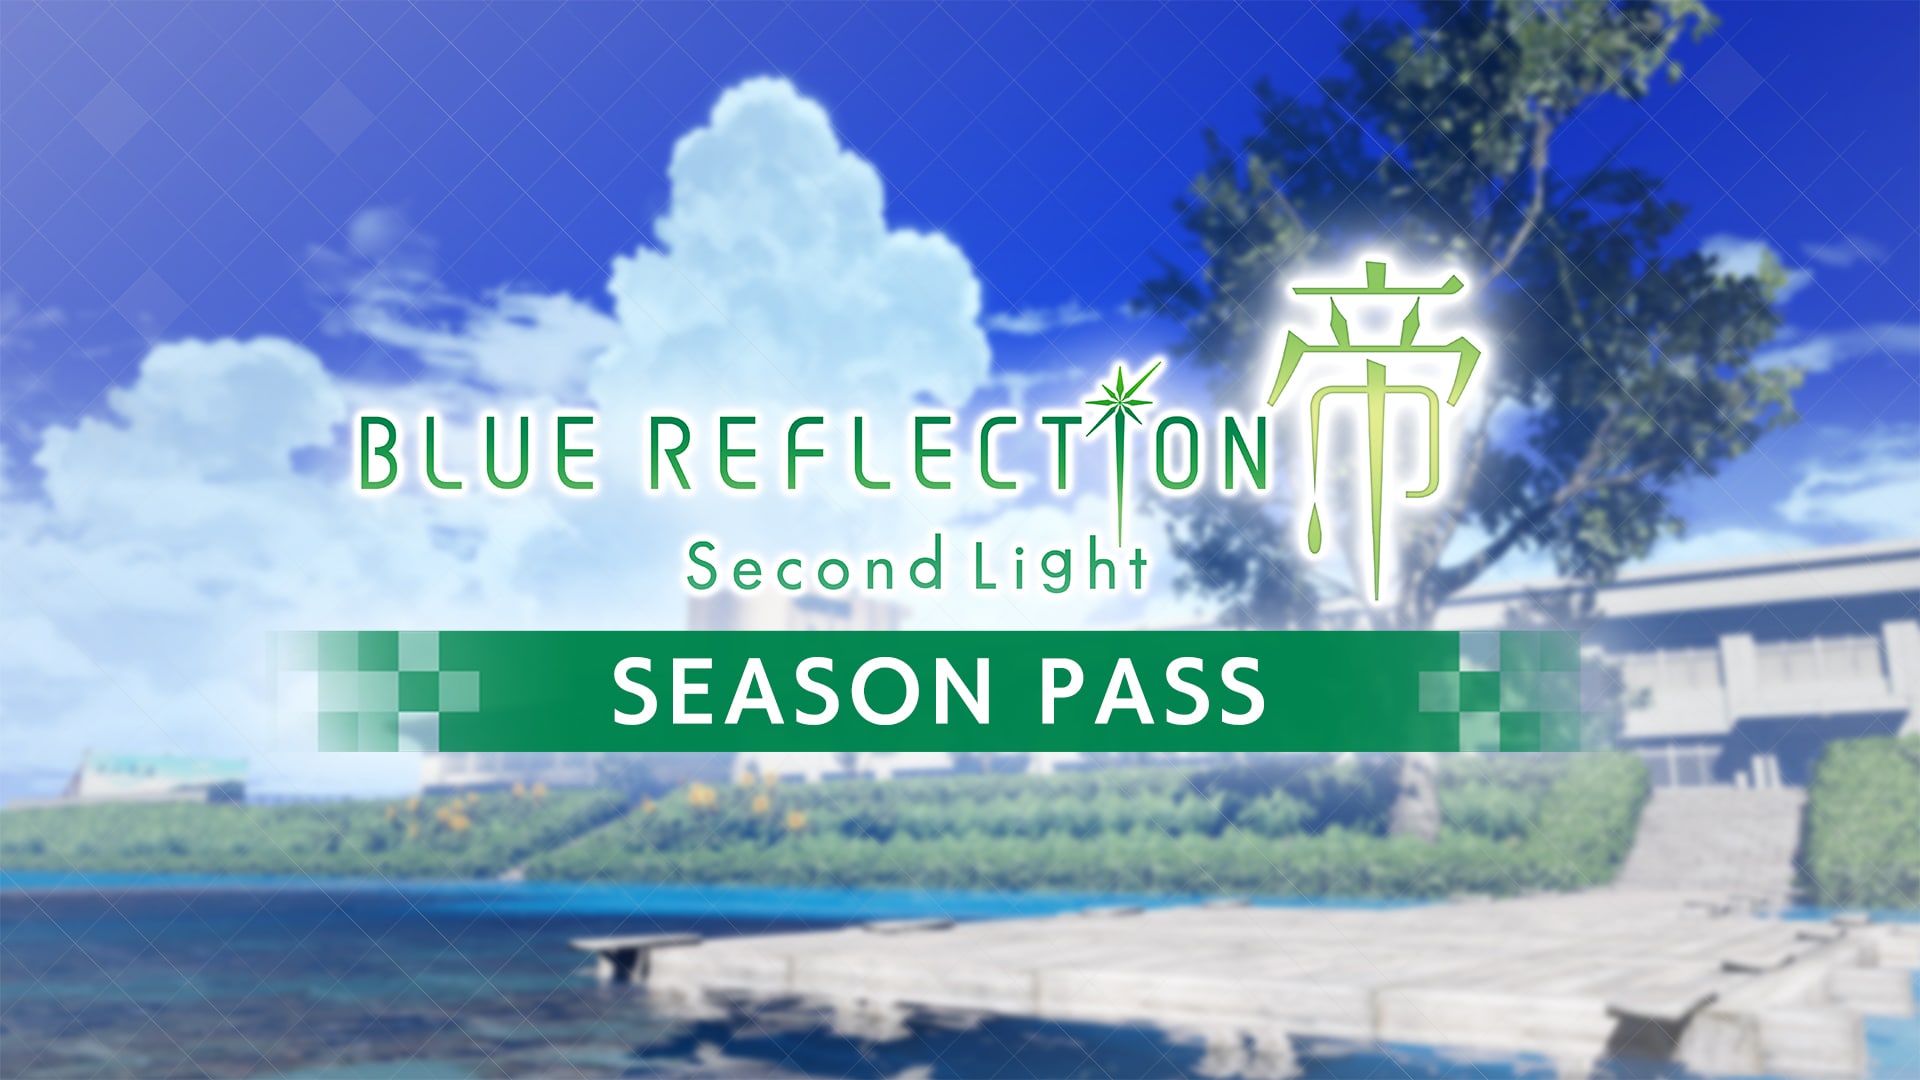 BLUE REFLECTION: Second Light Season Pass